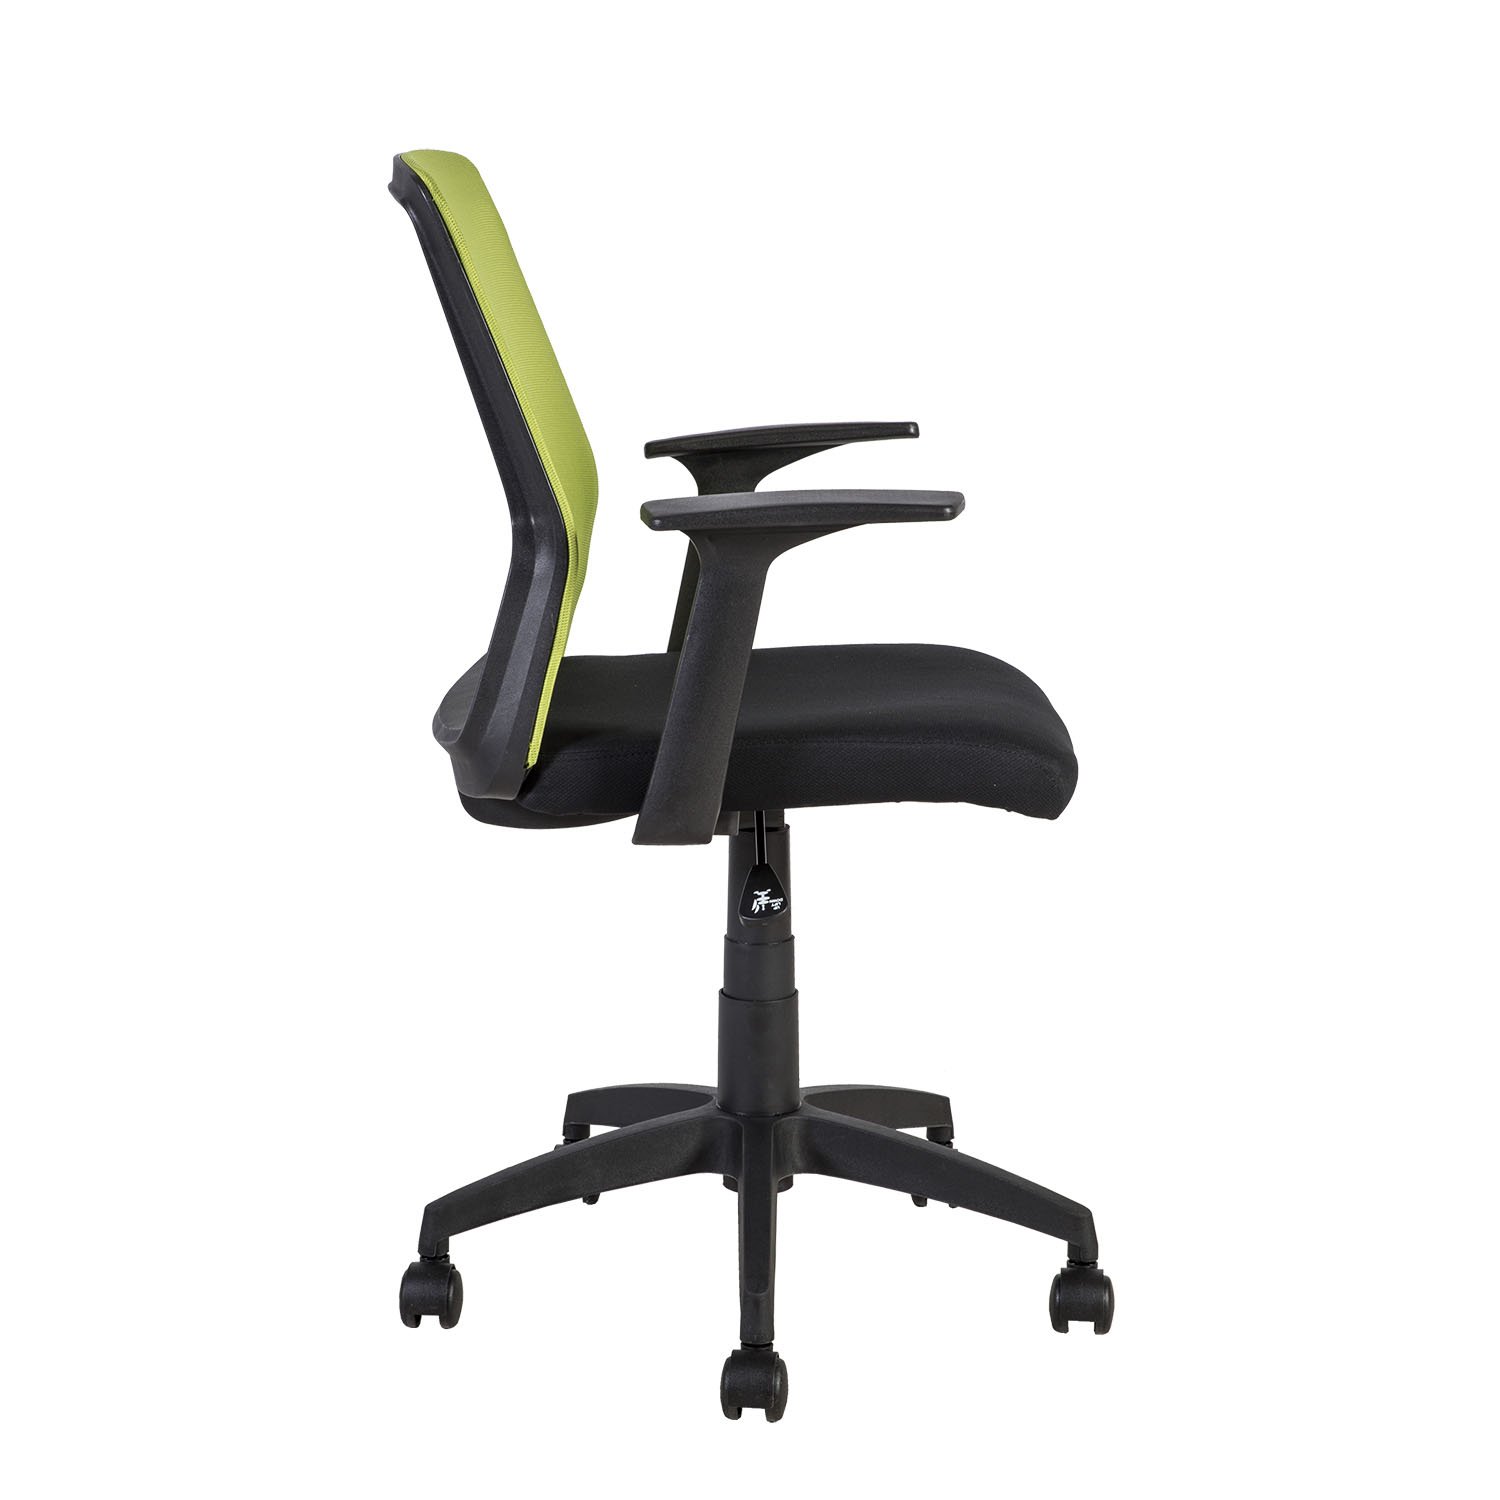 Biuro kėdė ALPHA, 60x55x87,5-95 cm, juoda/žalia - 2